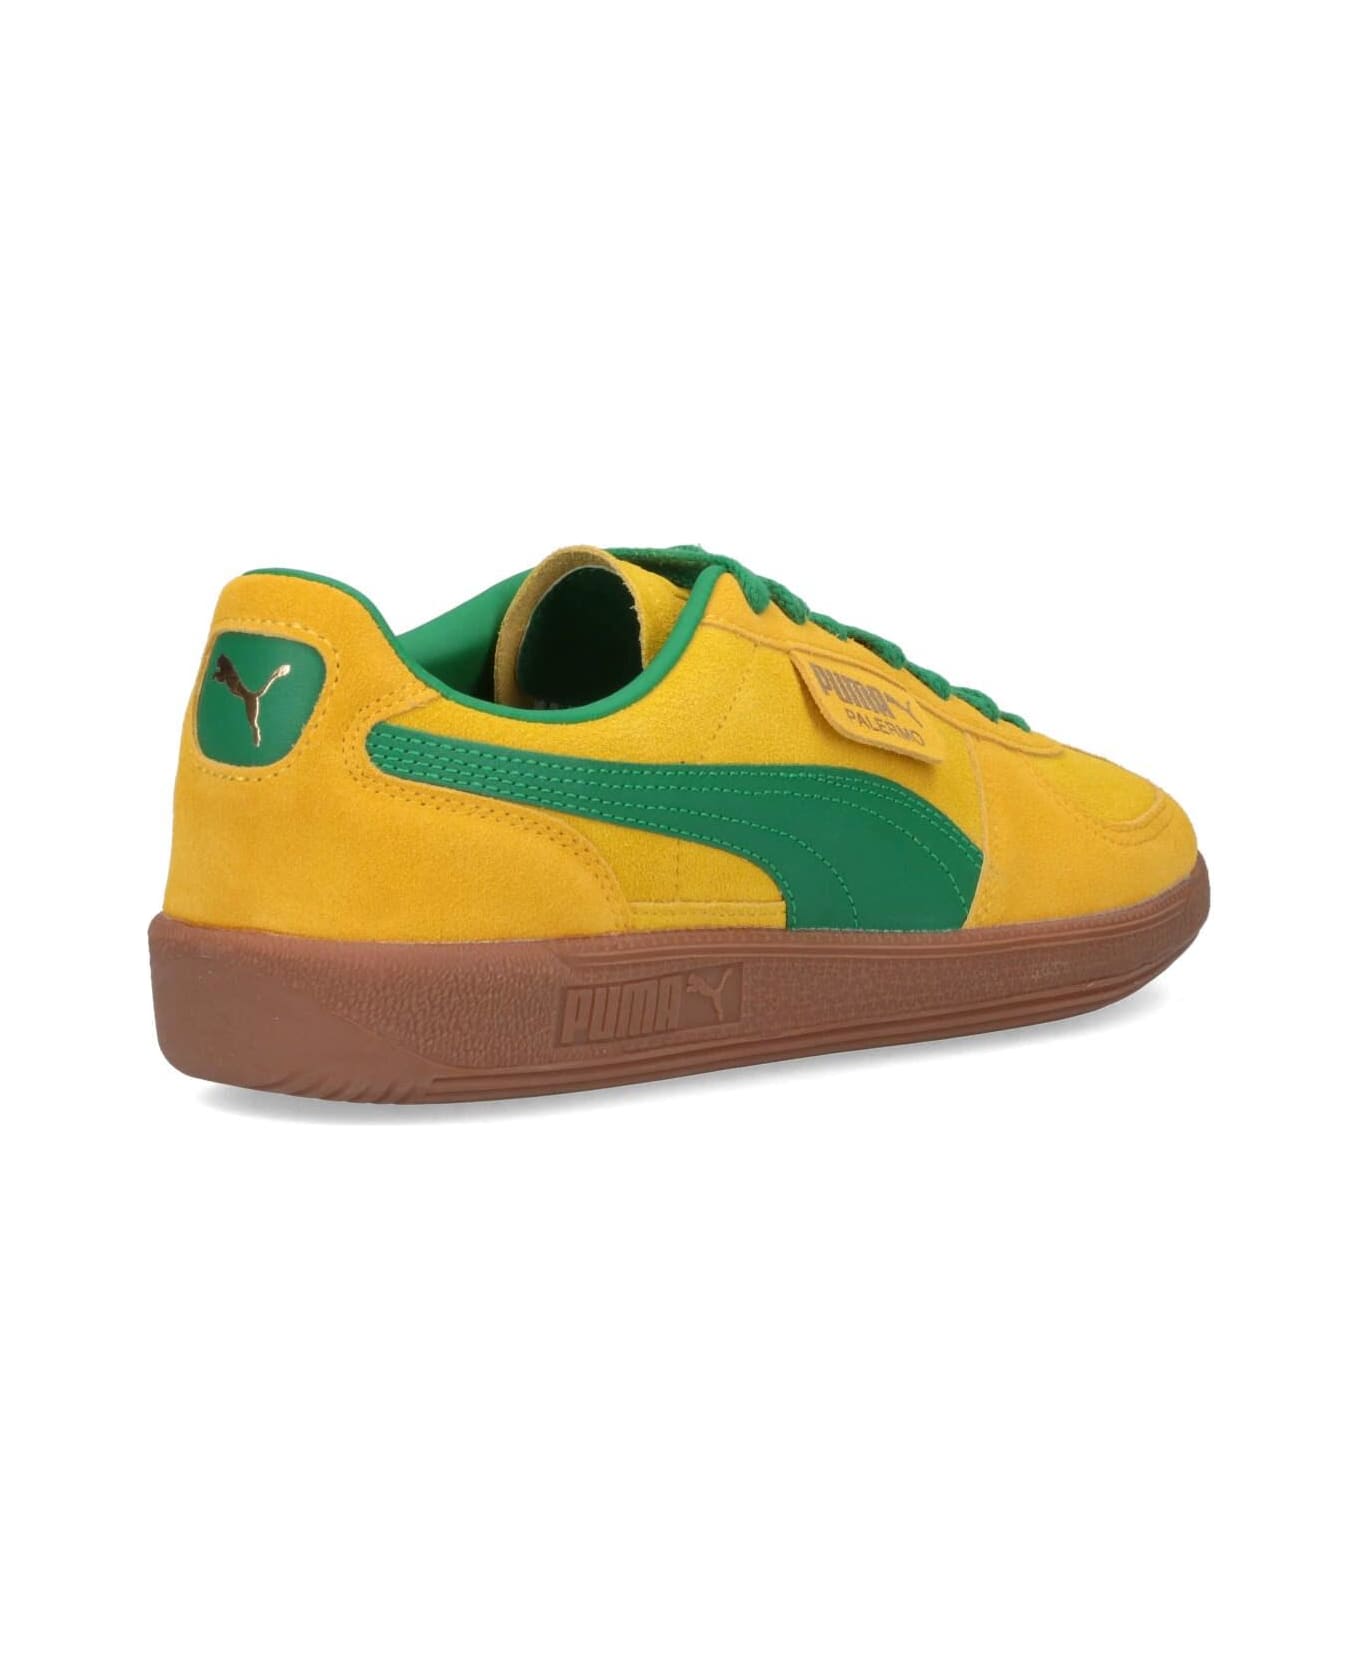 Puma 'palermo' Sneakers - Yellow